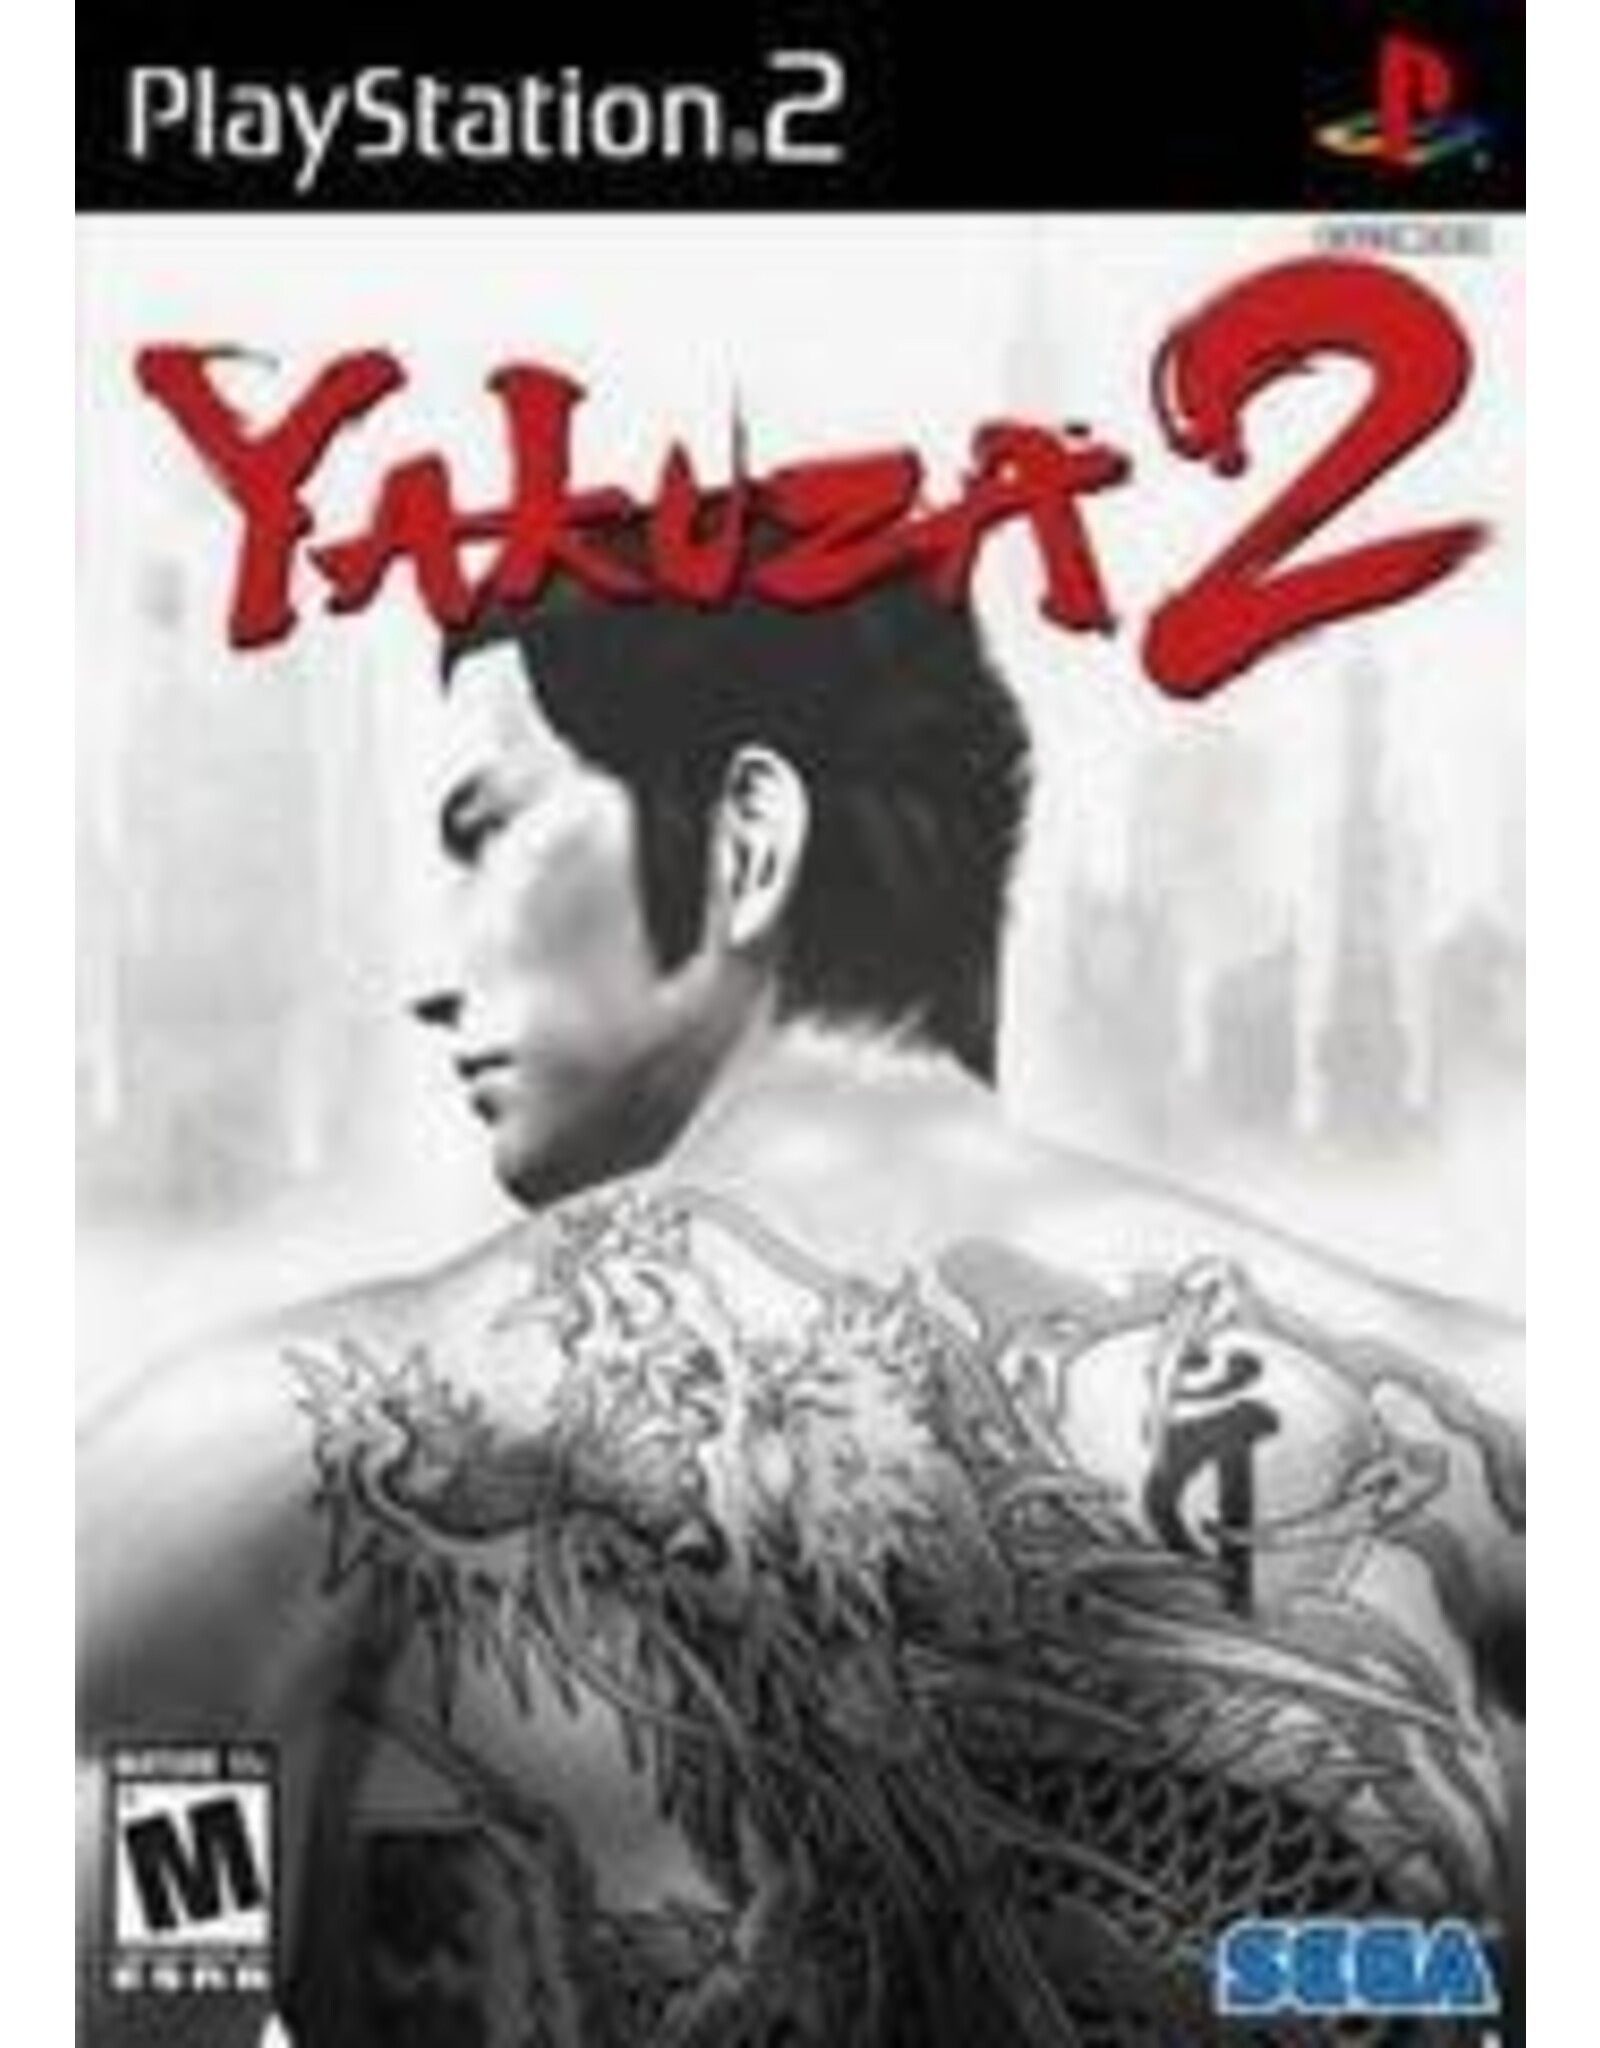 Playstation 2 Yakuza 2 (Used)